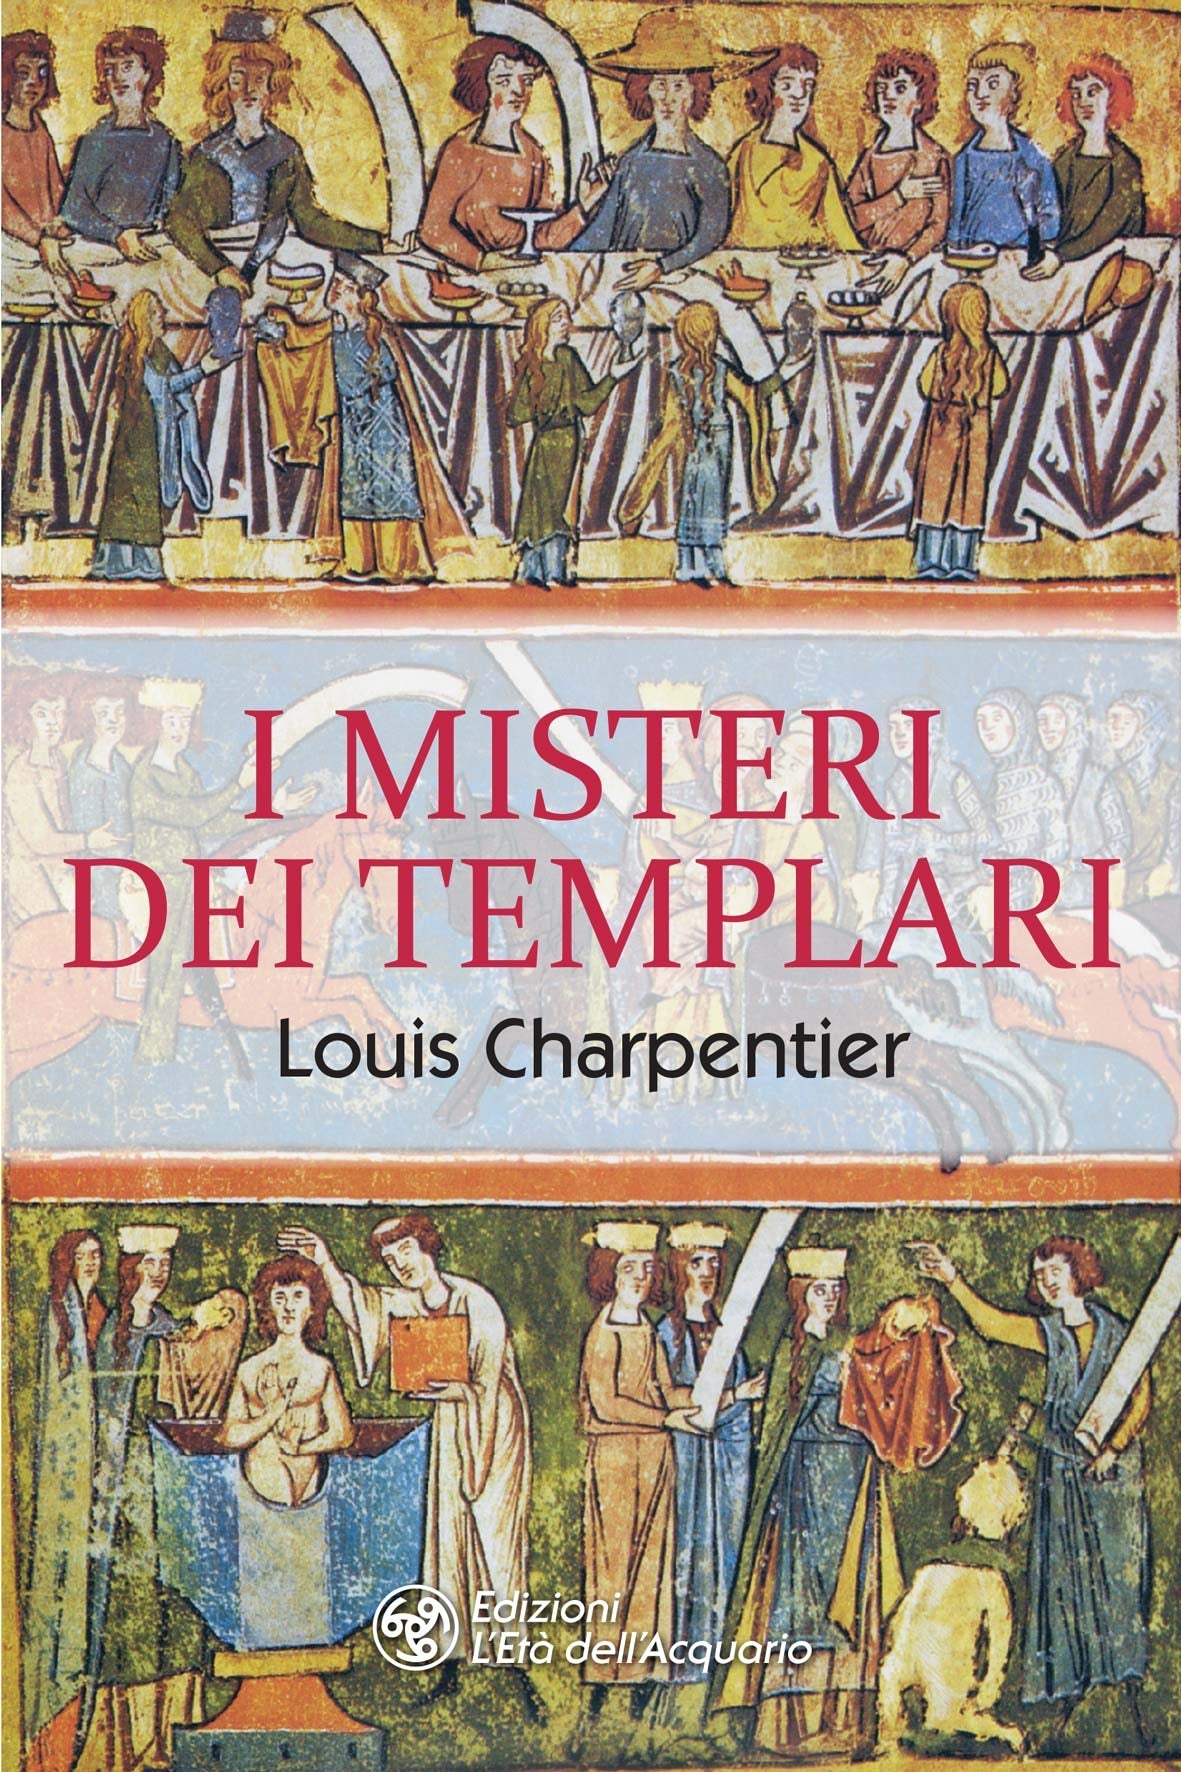 I MISTERI DEI TEMPLARI - Louis Charpentier